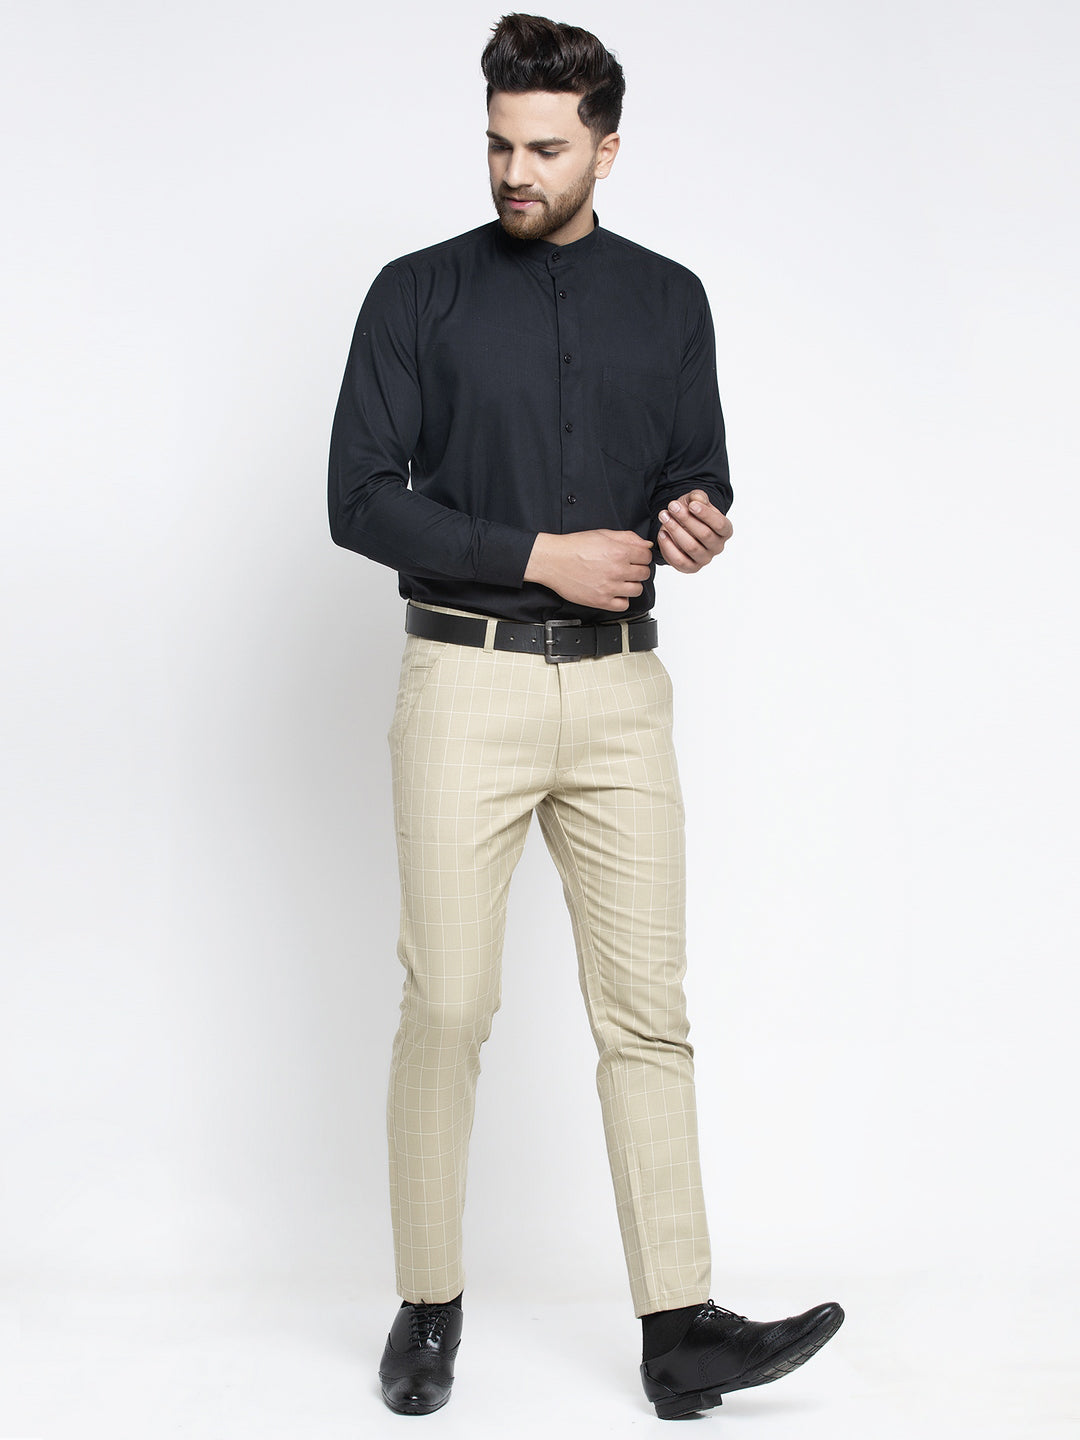 fcity.in - Black Cream Slim Fit Formal Trouser Formal Pant For Men / Fancy